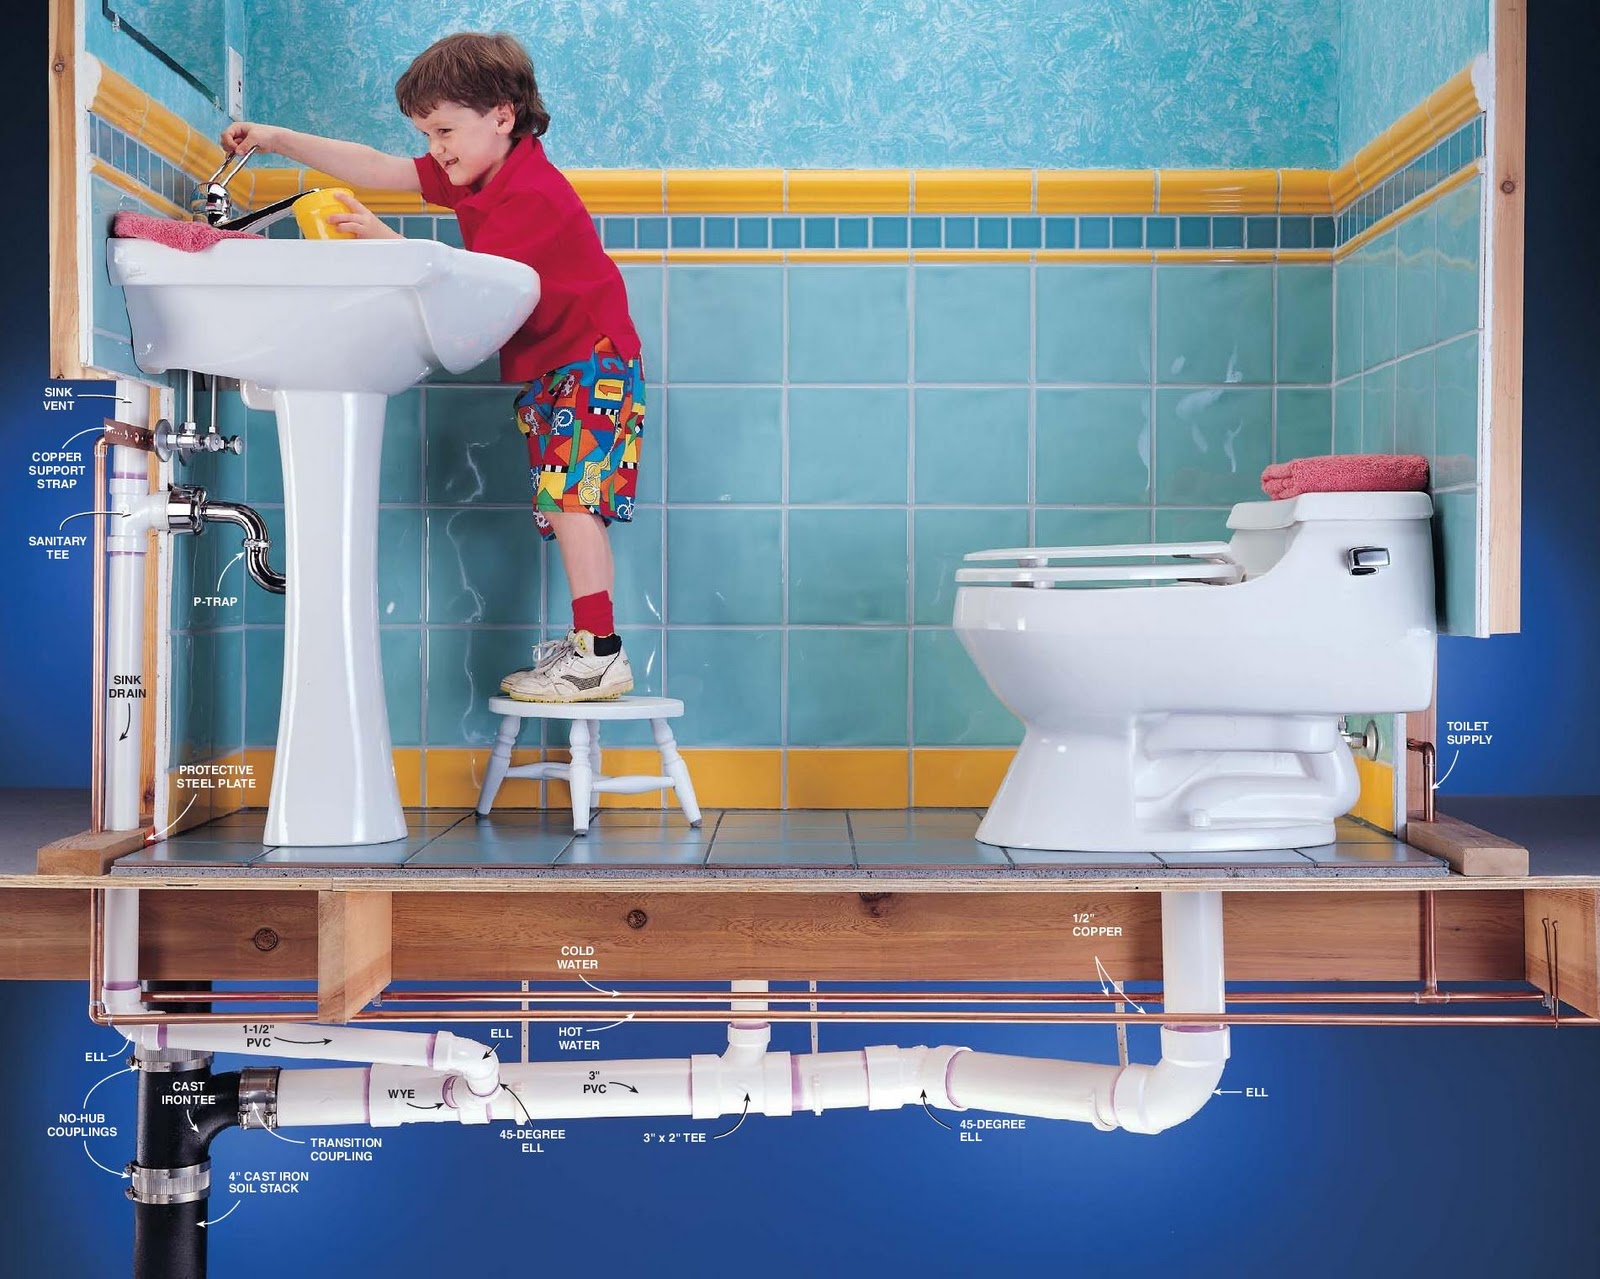 plumbing instalation on bathroom sink video